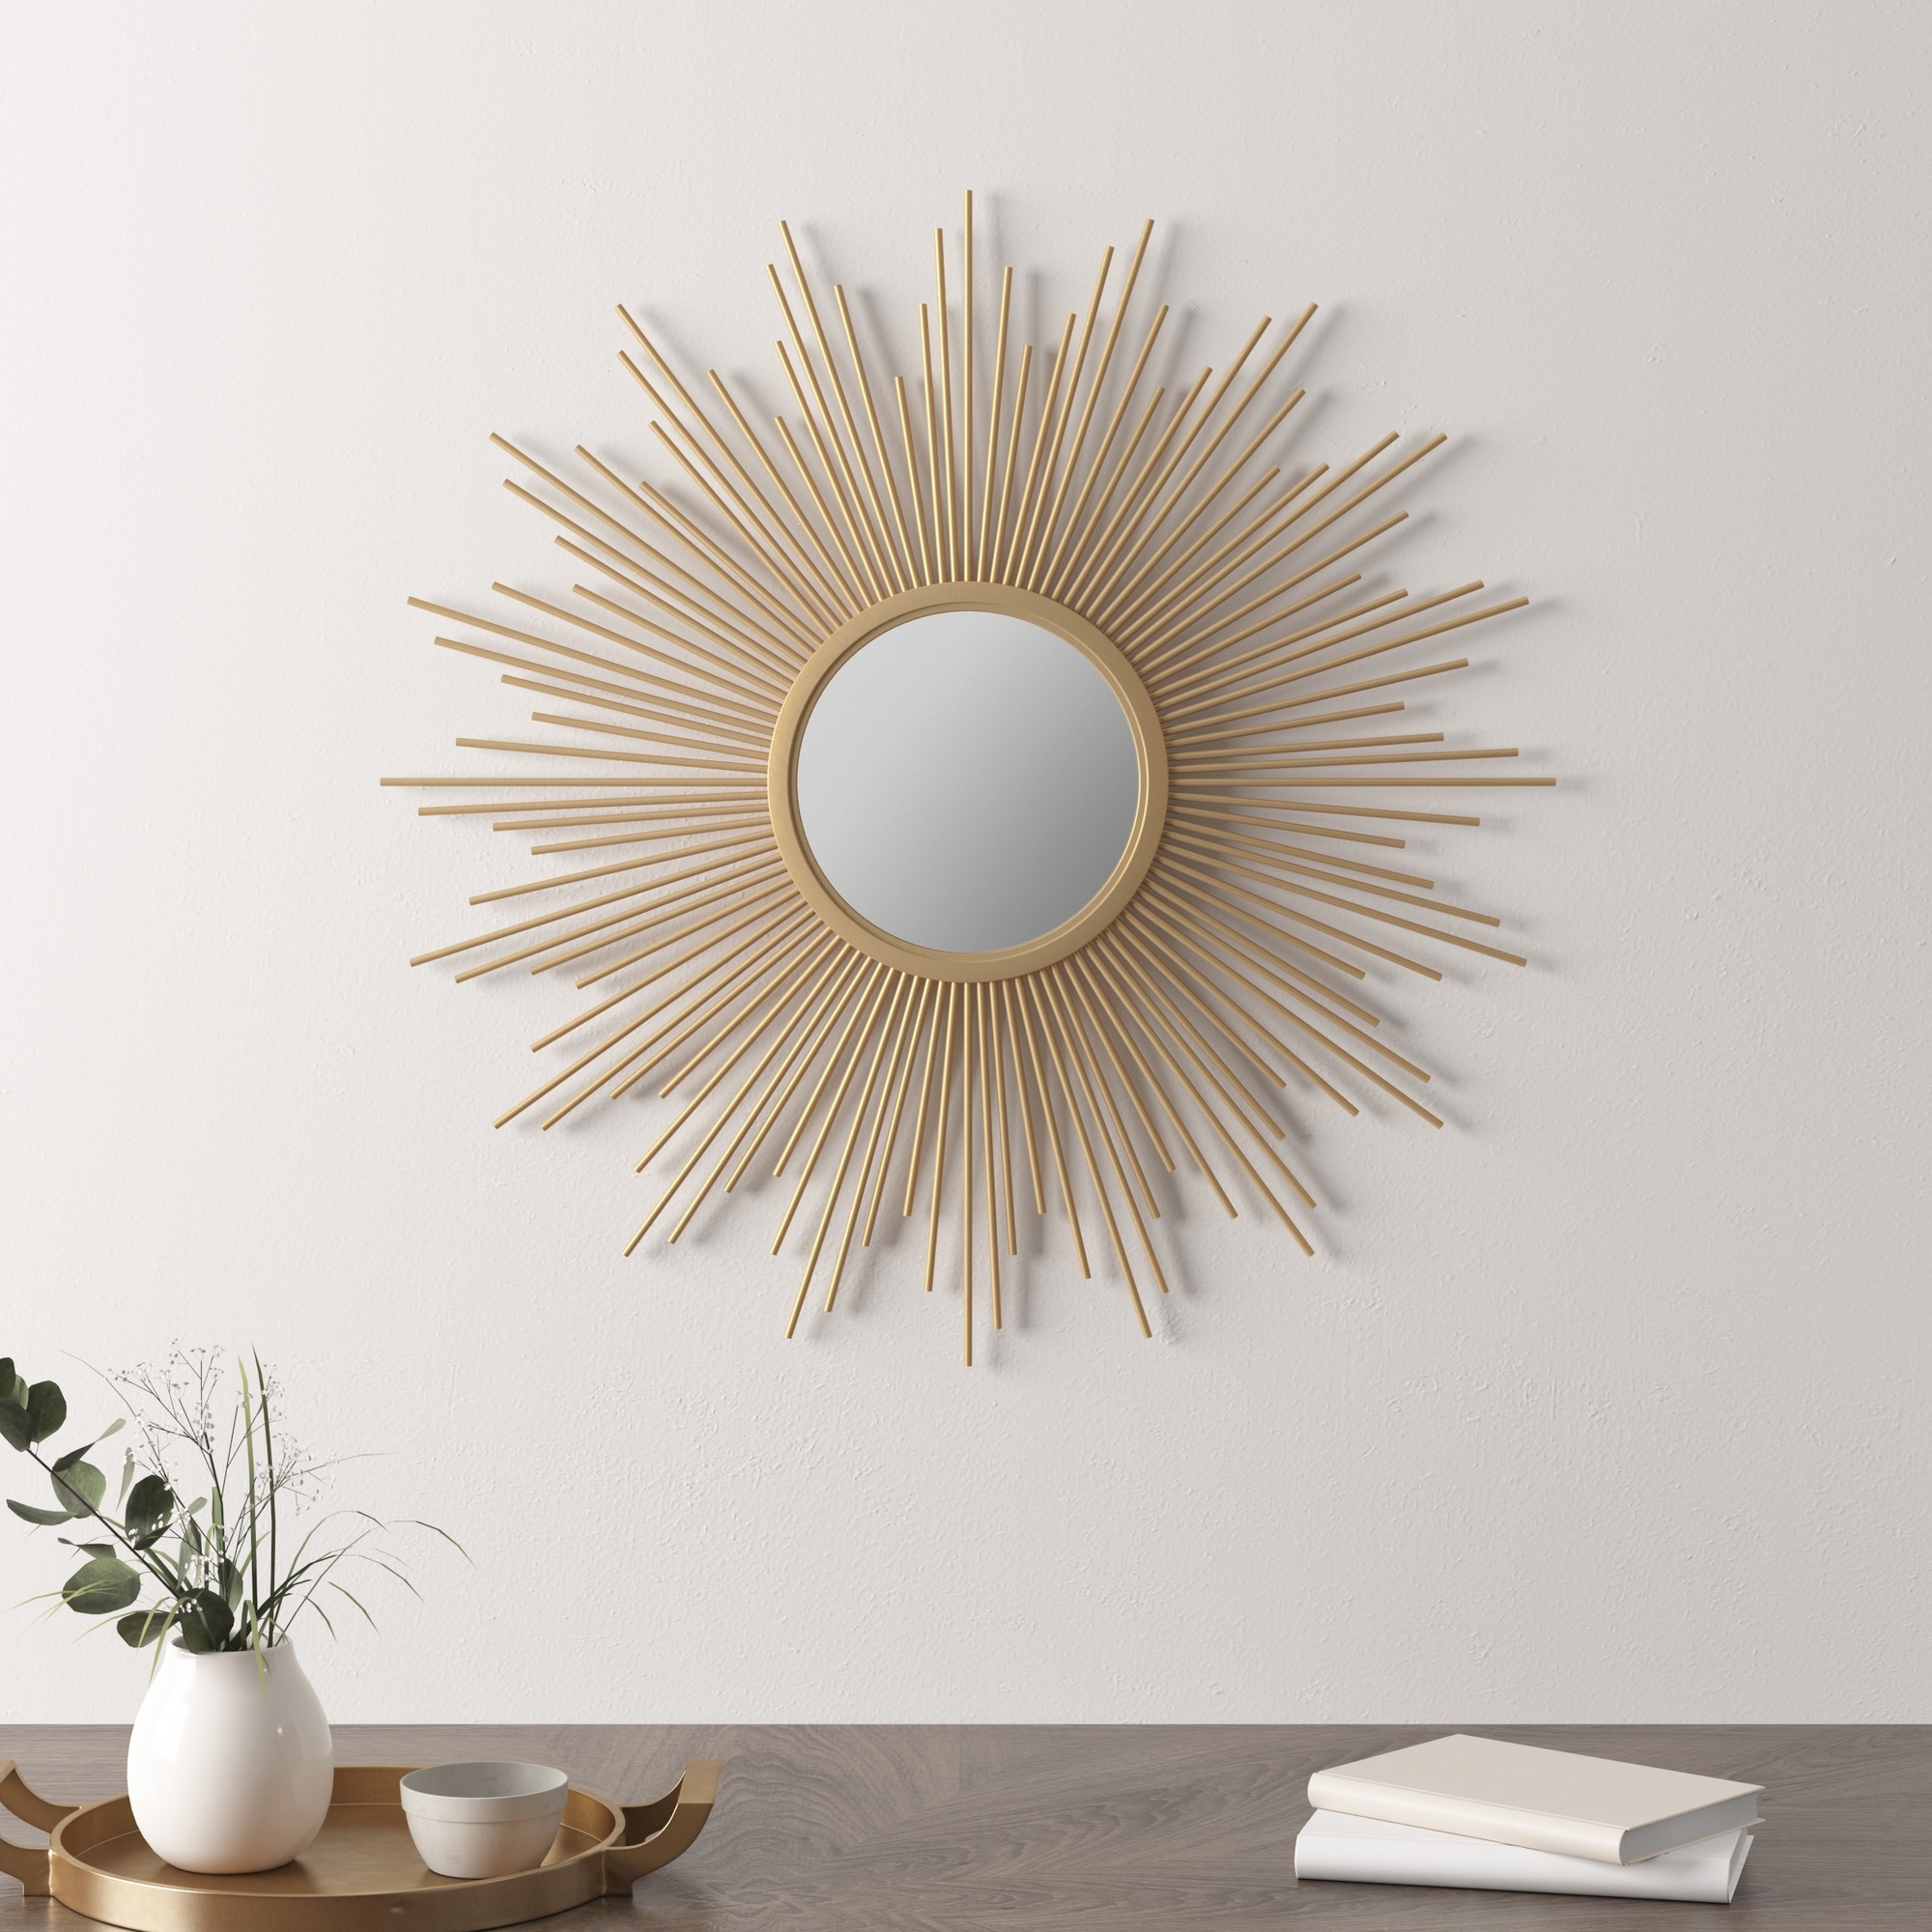 Decorative Sunbrust Golden Metal Art Craft Wall Mirror - China